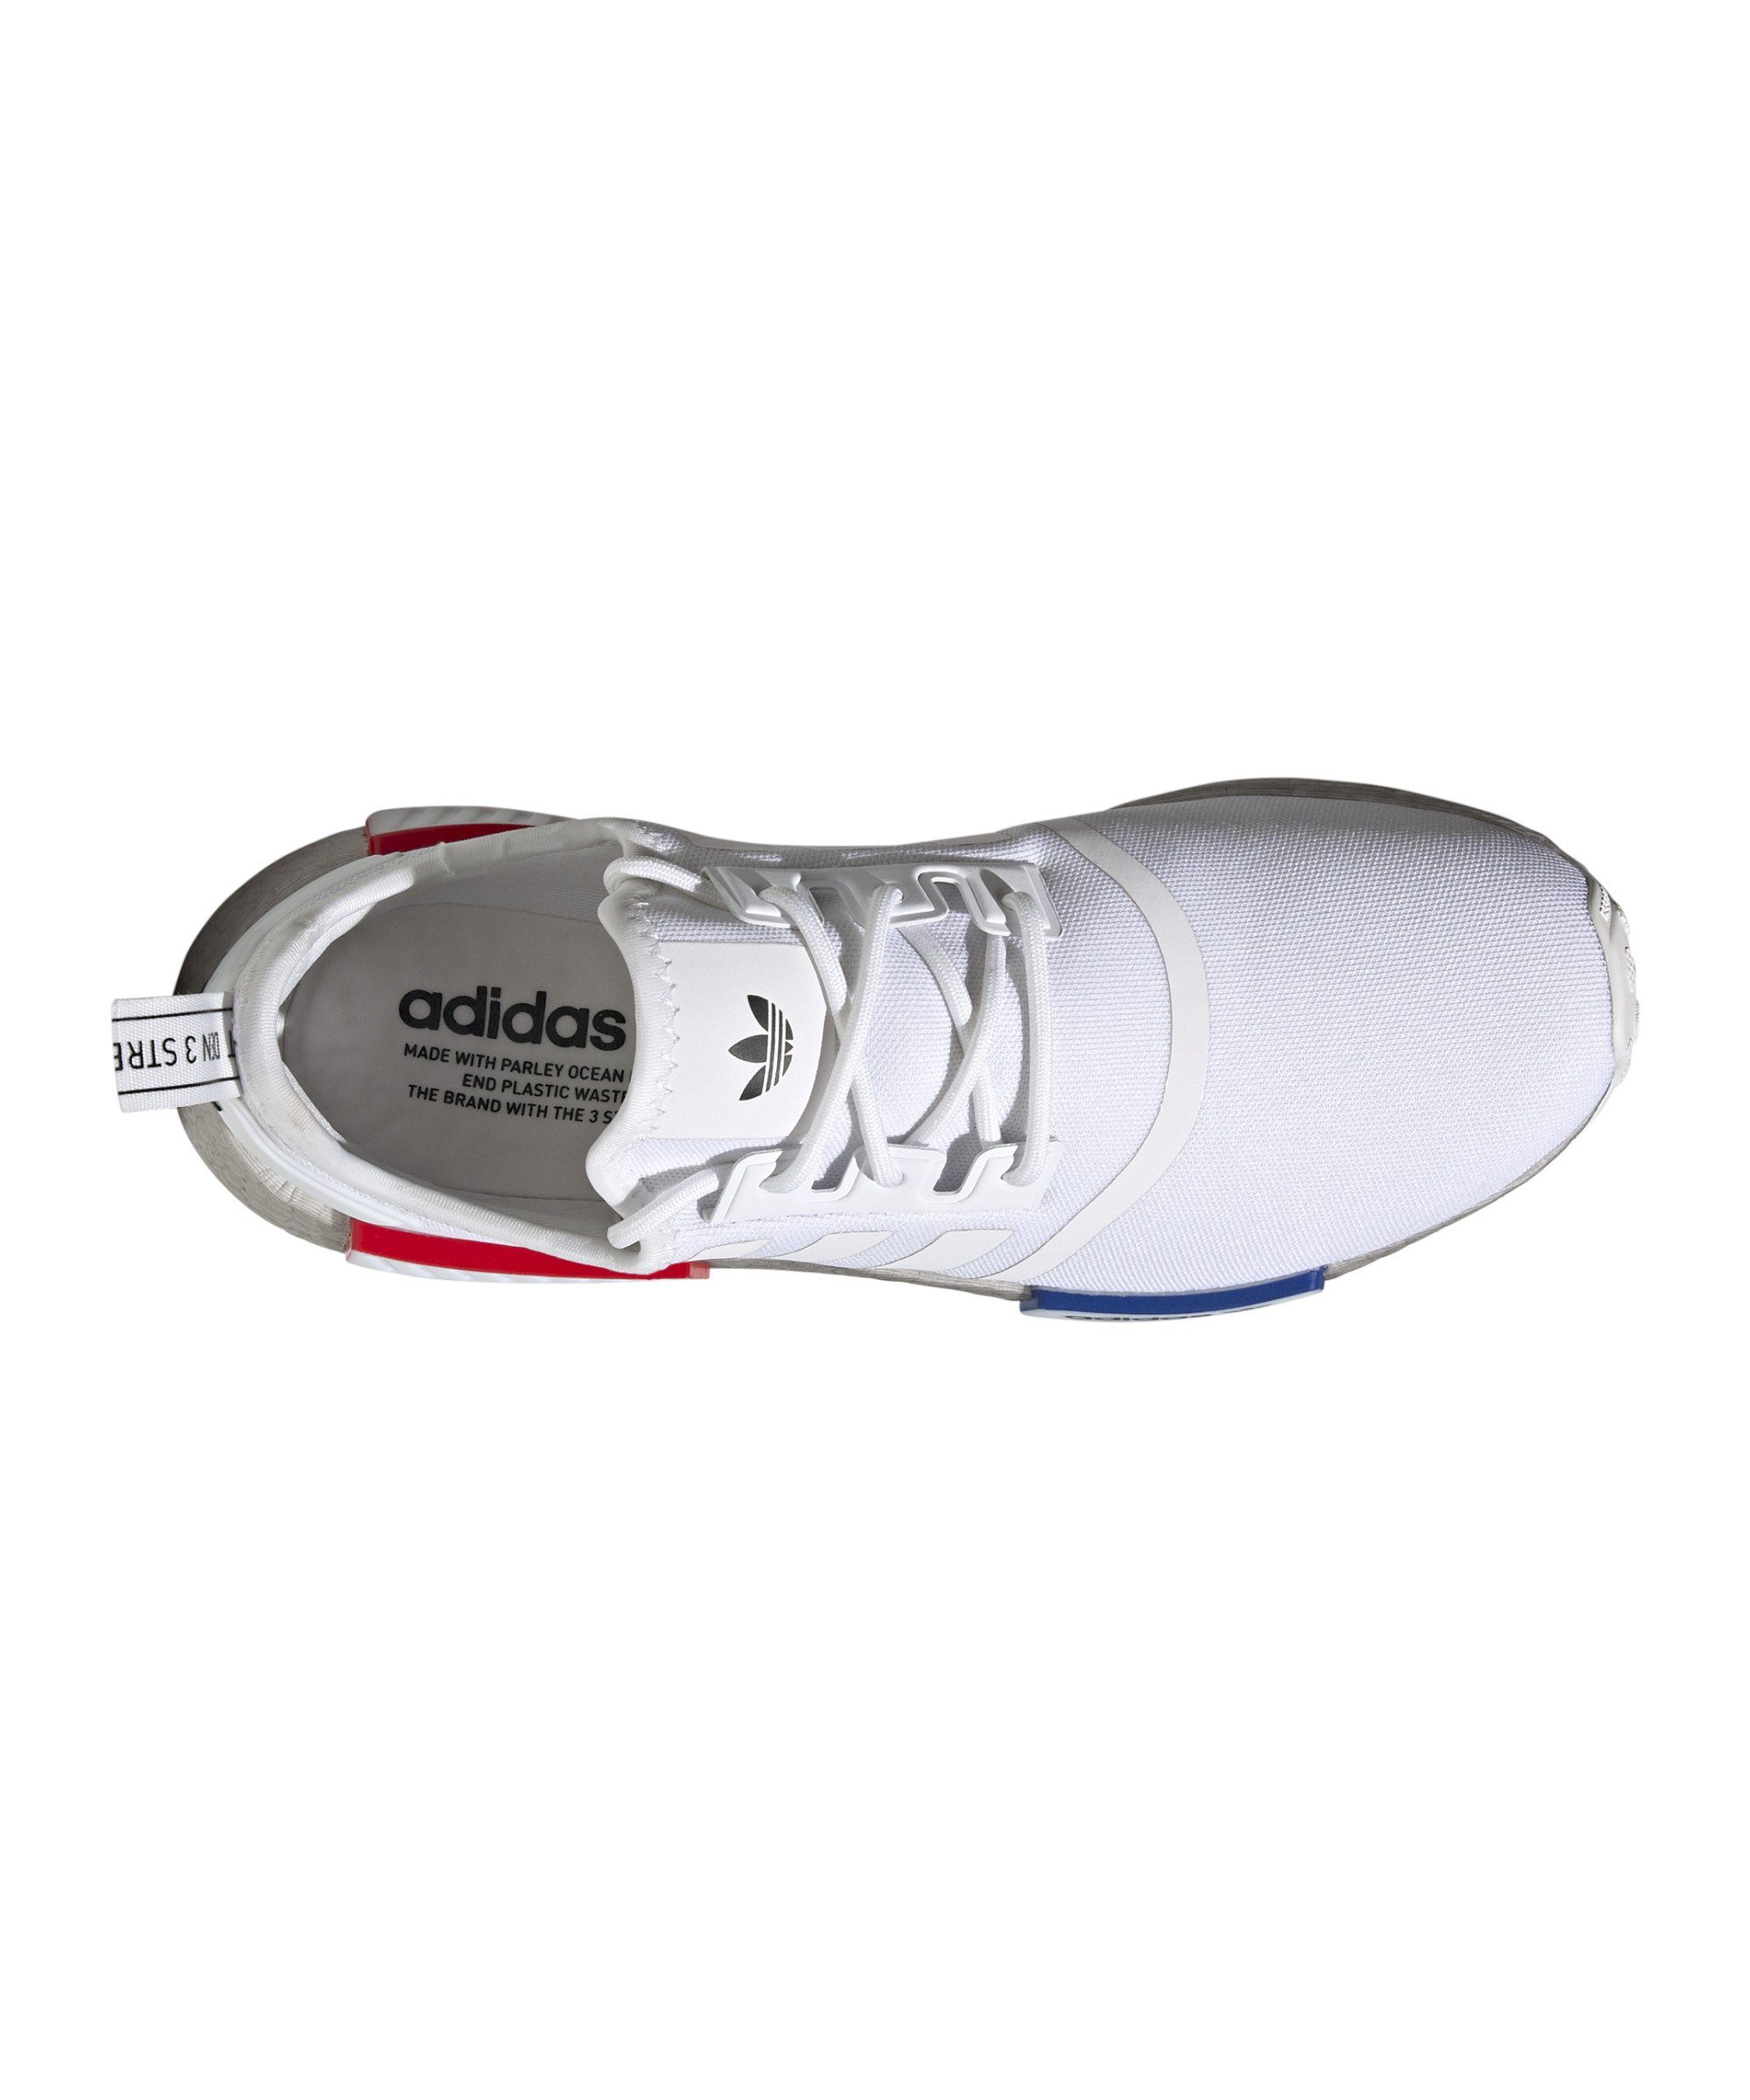 Sneaker Originals R1 weissgrau adidas NMD